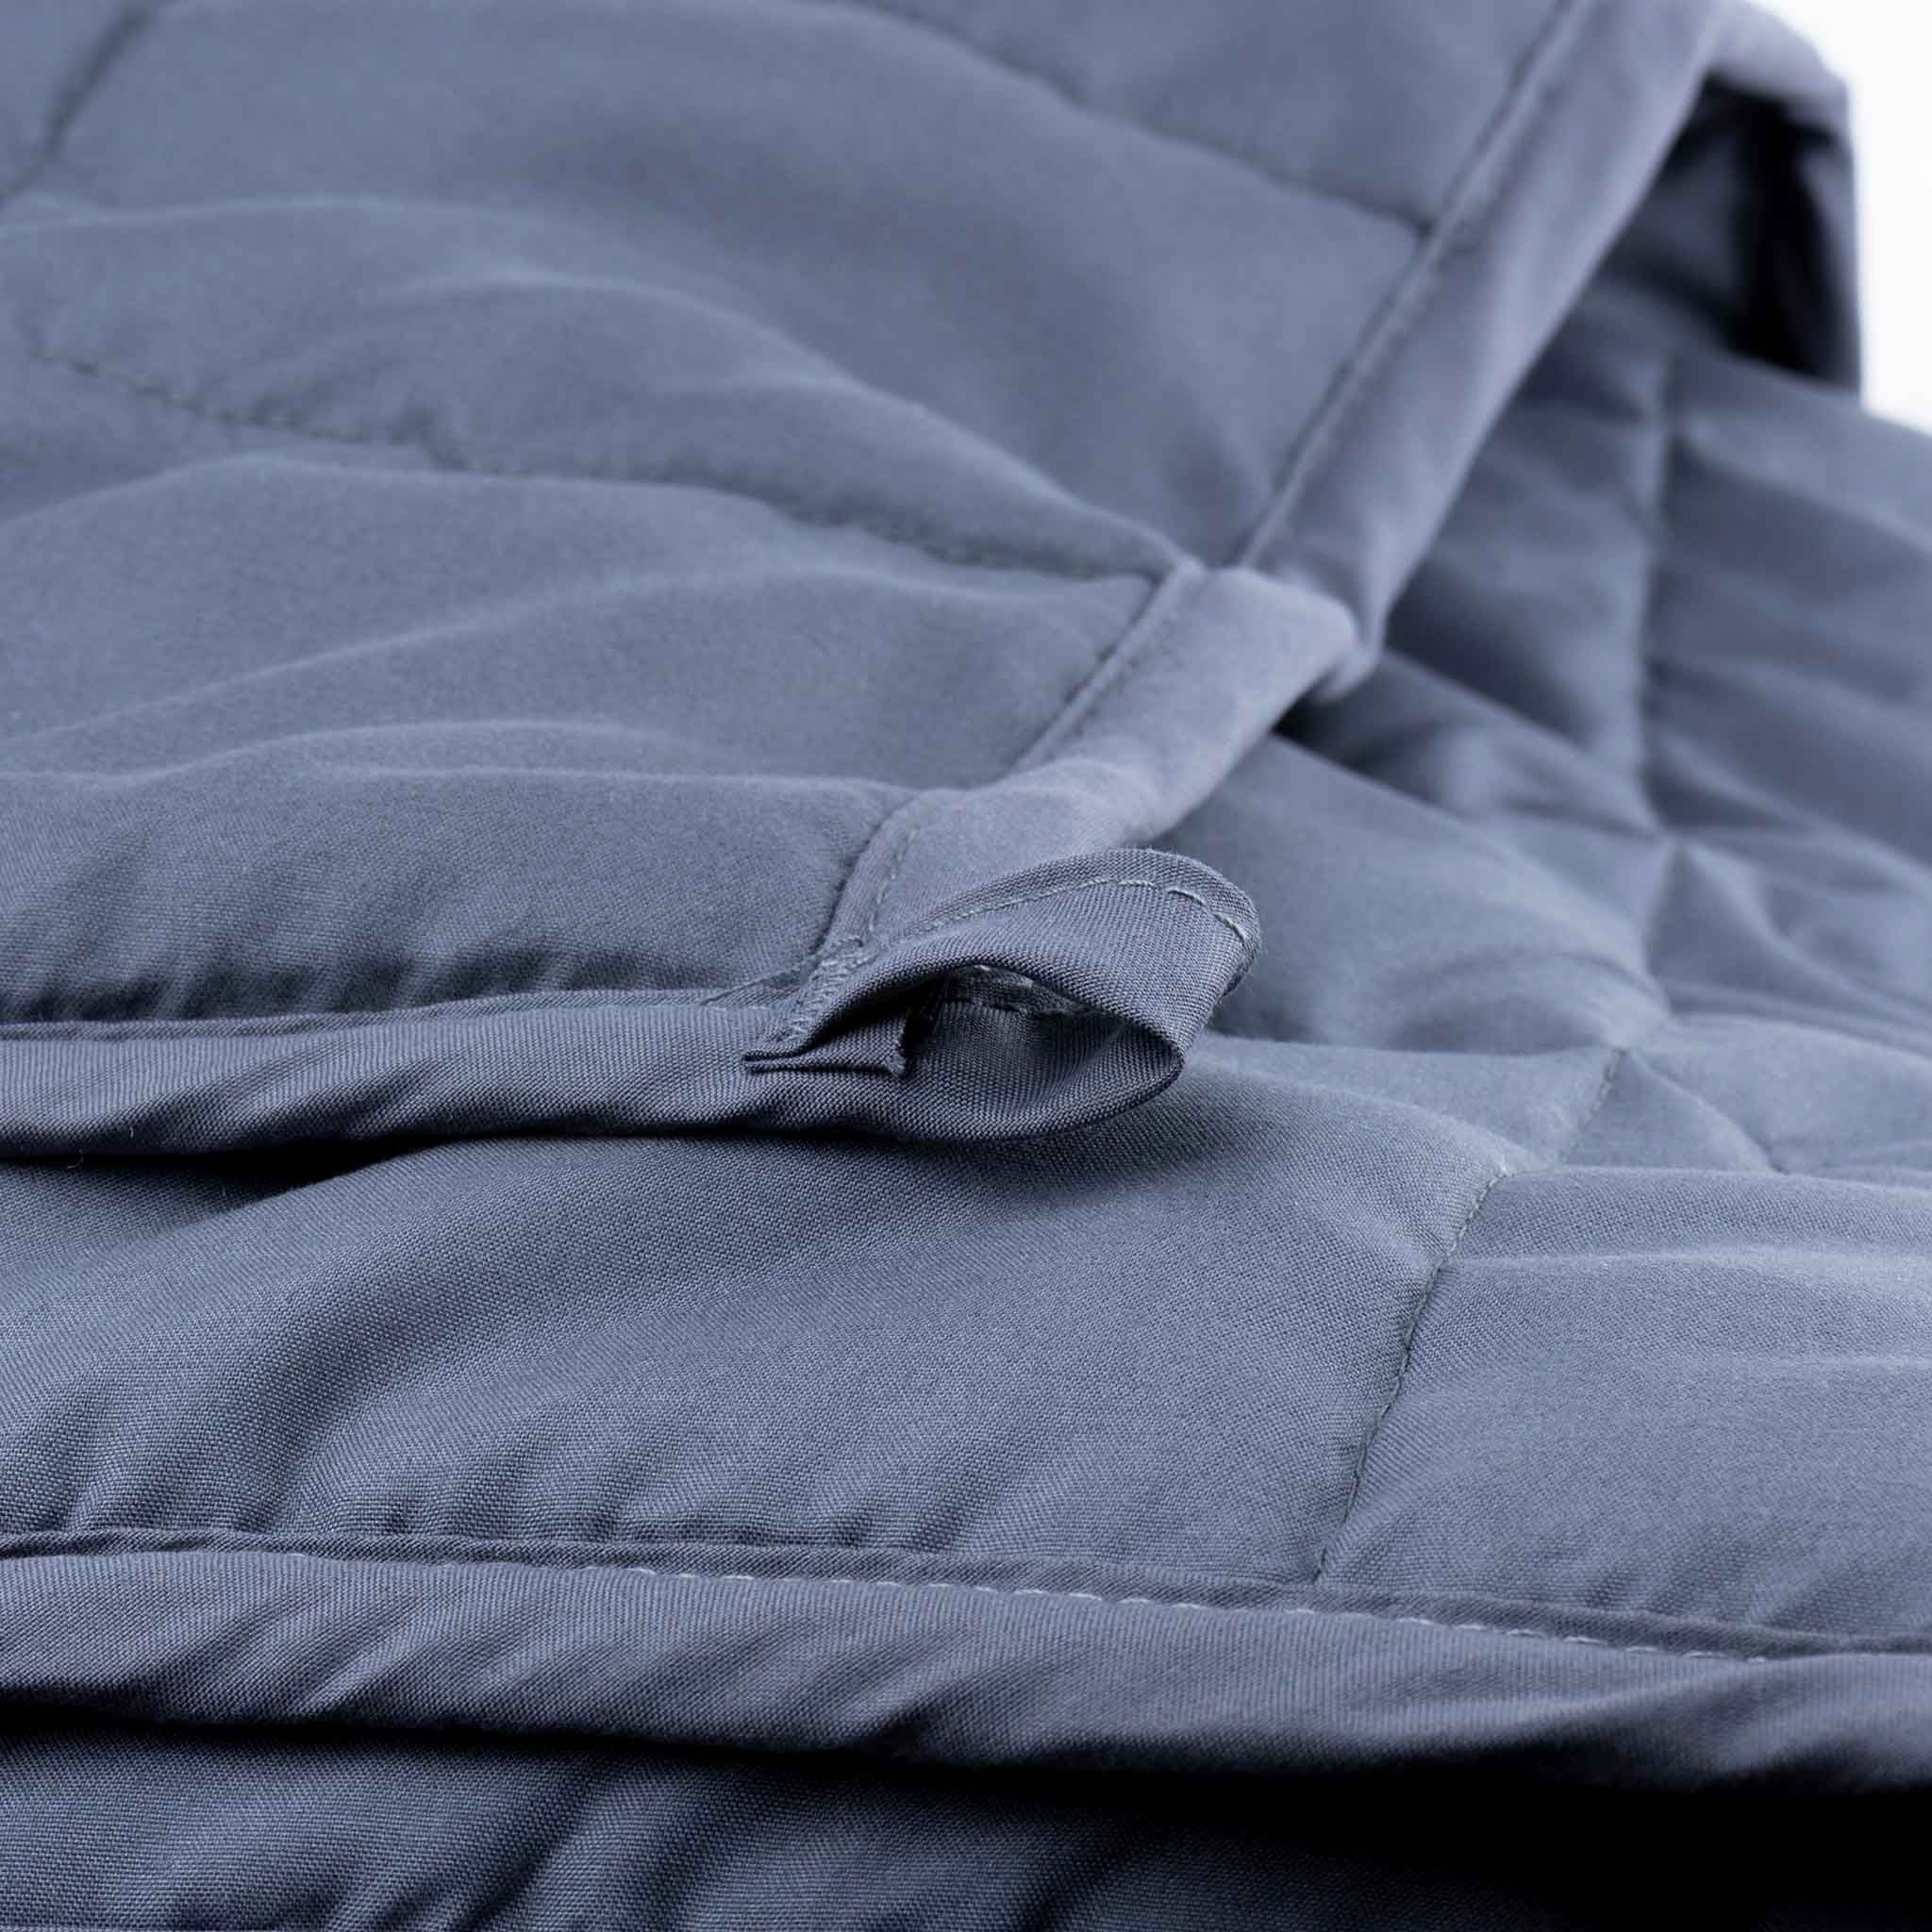 Polar Night Weighted Blanket 5-13kg, 150x200cm (cotton) - 79,90 EUR - Polar  Night